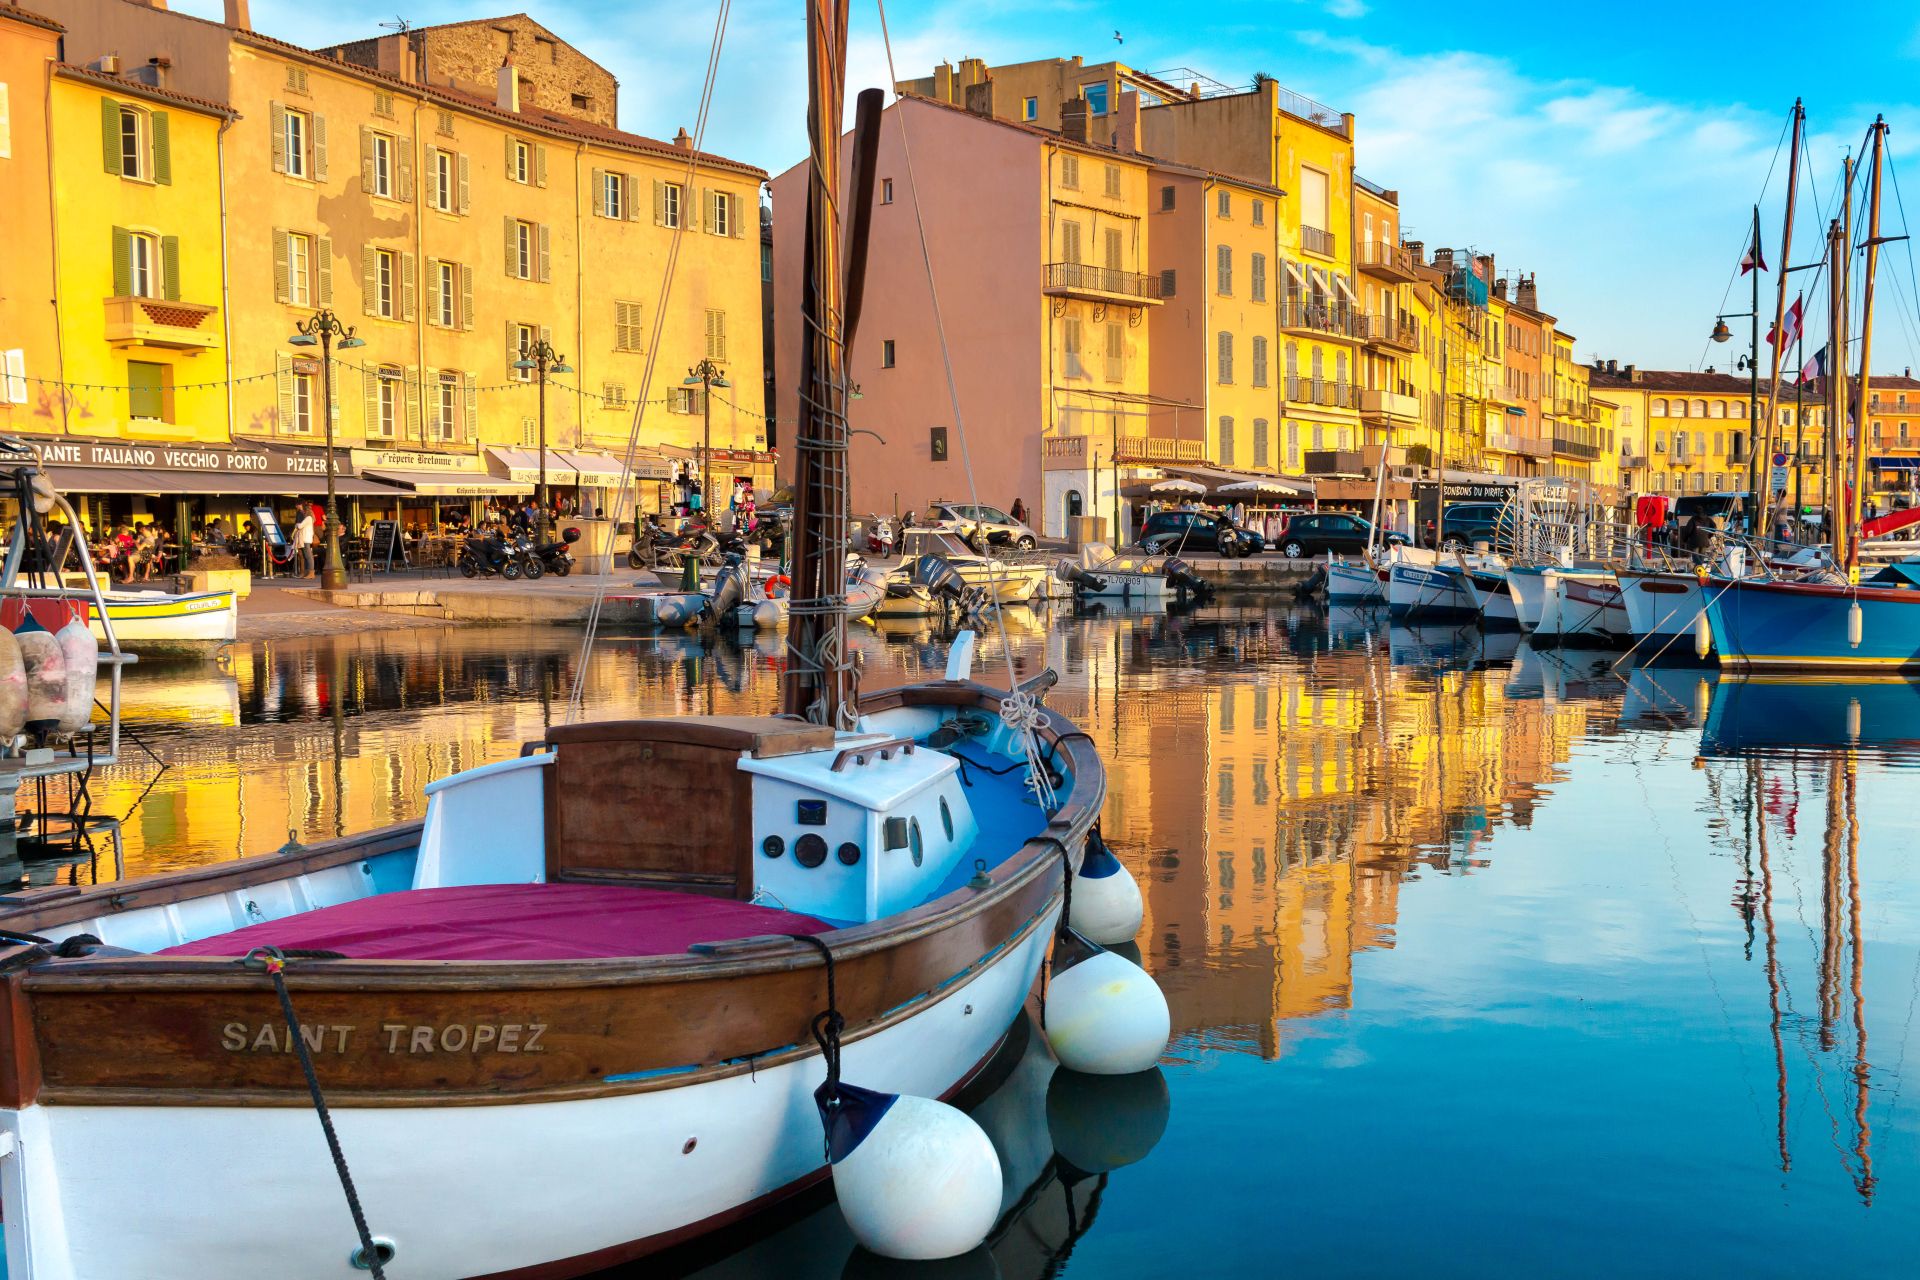 Saint-Tropez isn't just for Celebrities